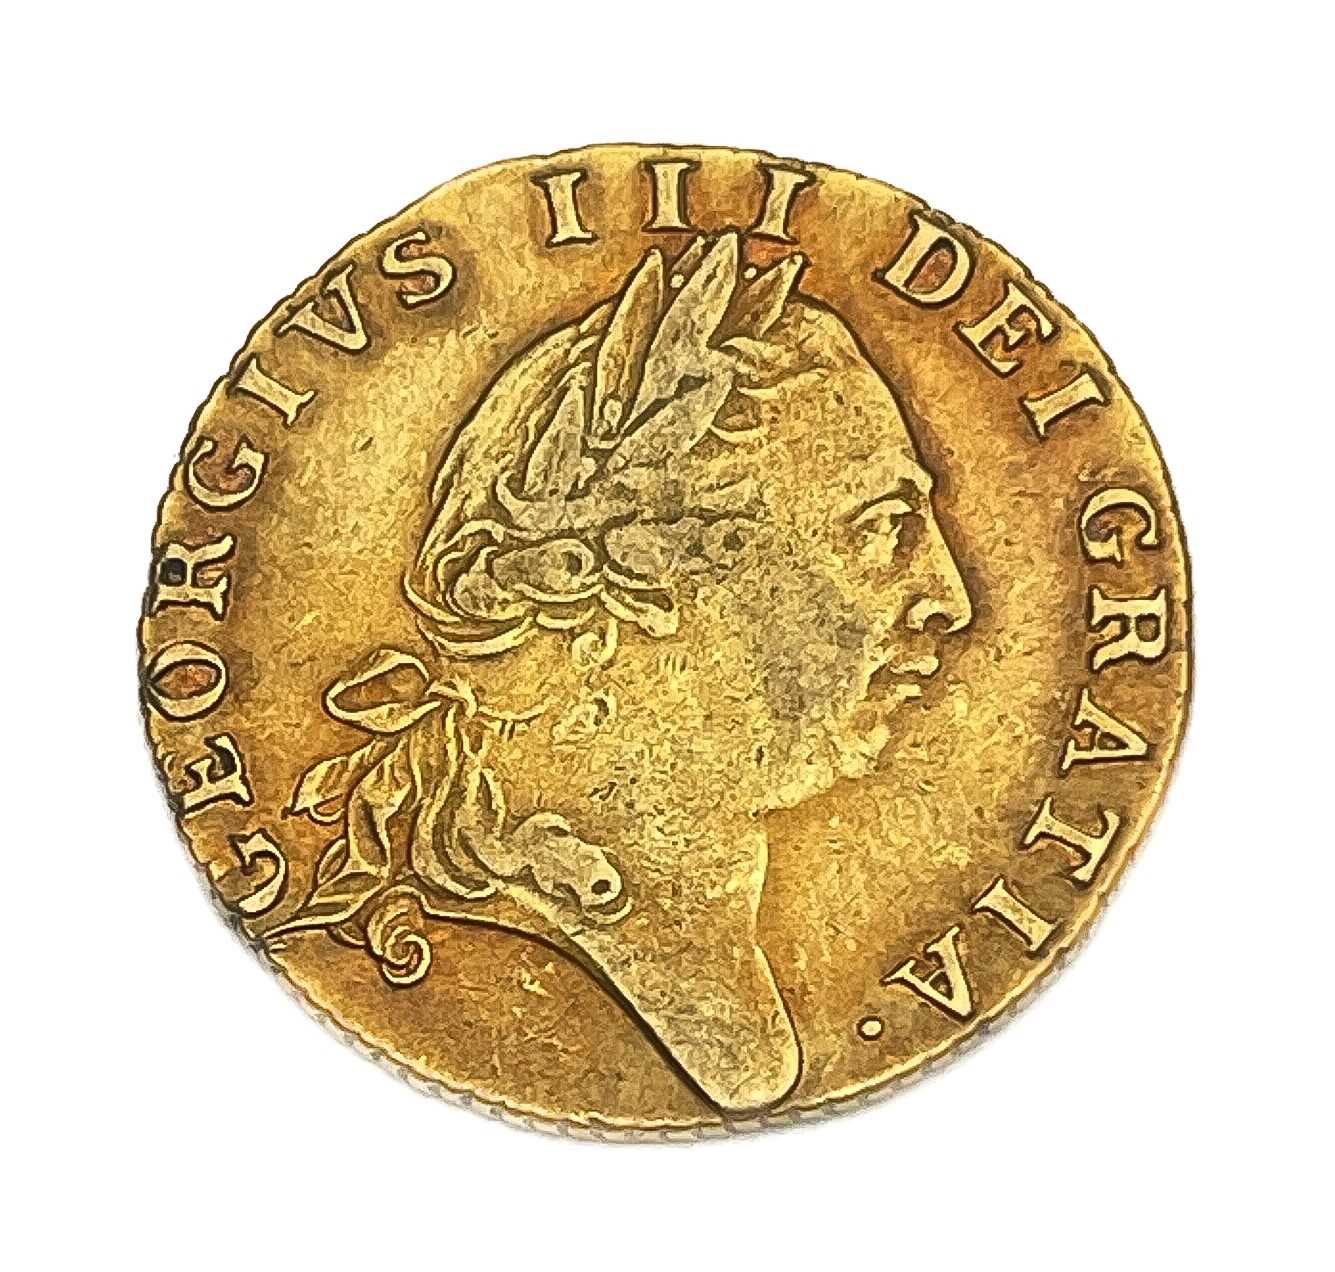 Guinea, George III, 1789. S.3729